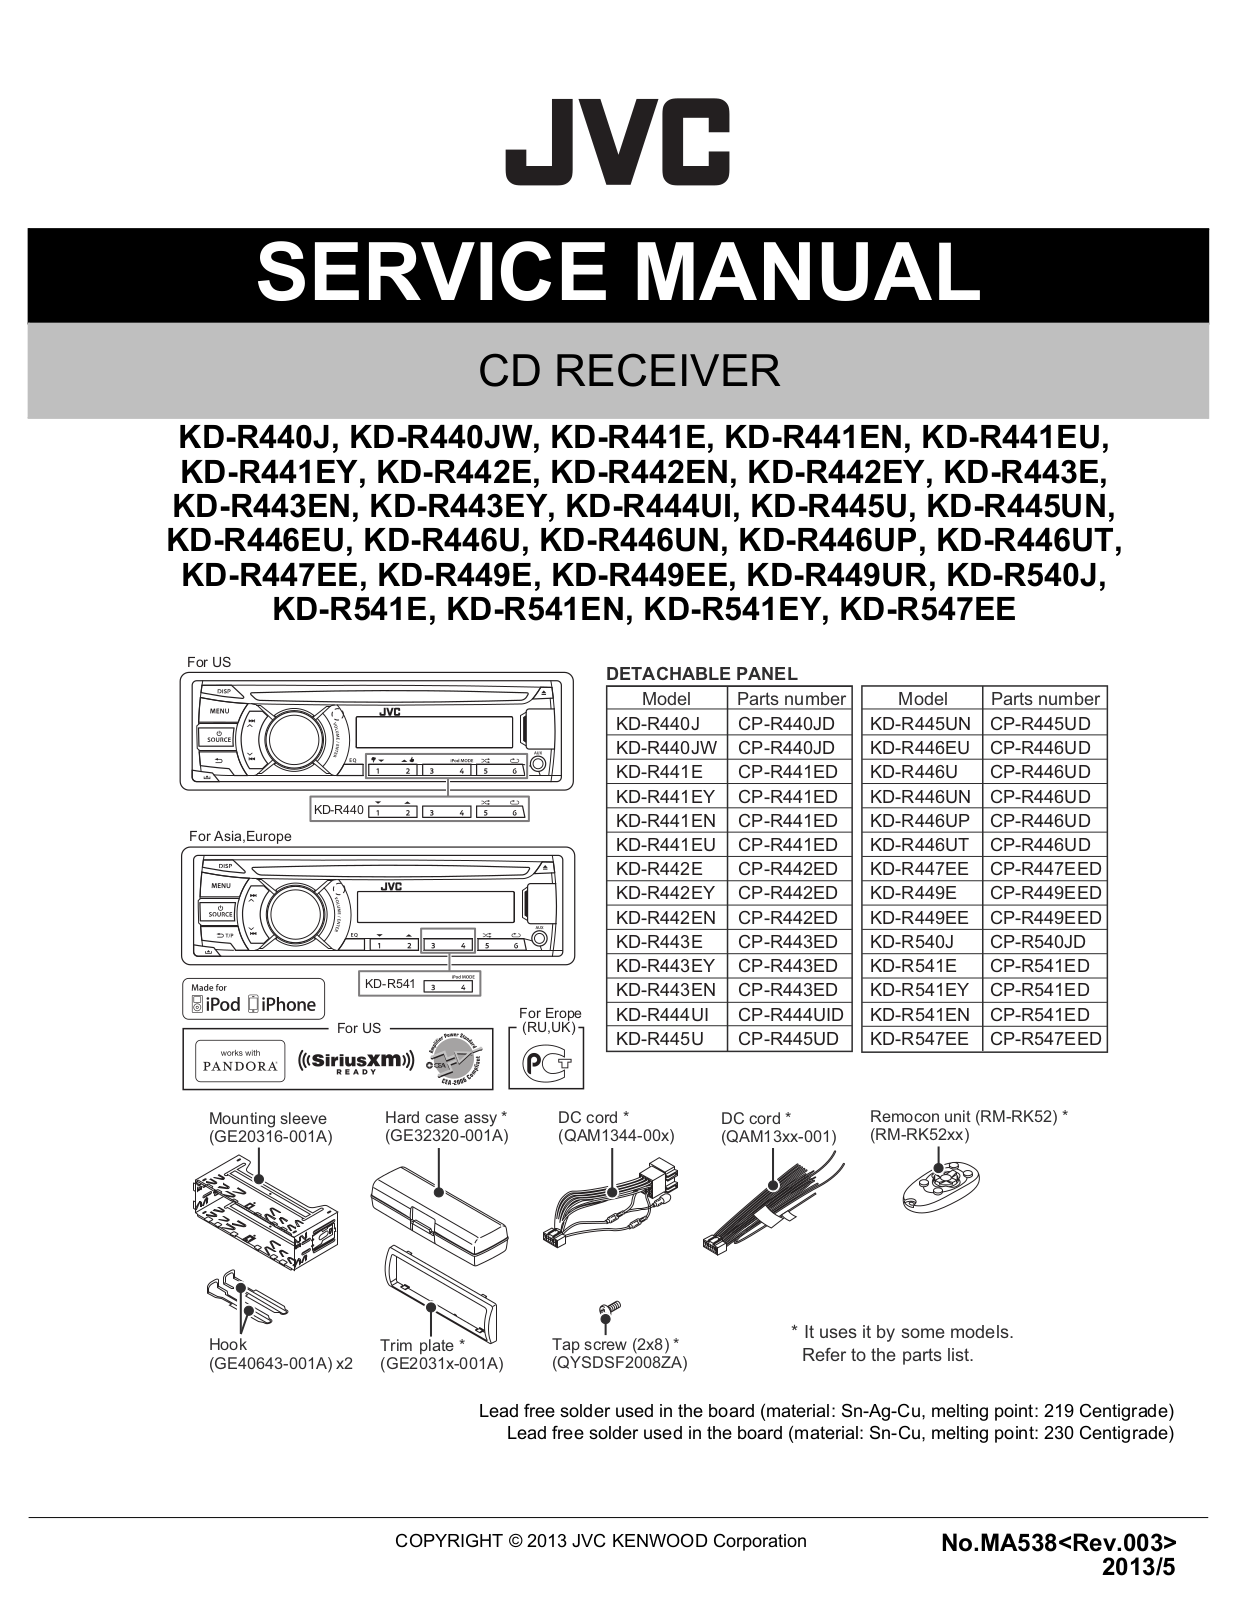 JVC KD-R440J, KD-R440JW, KD-R441E, KD-R441EN, KD-R441EU Service manual